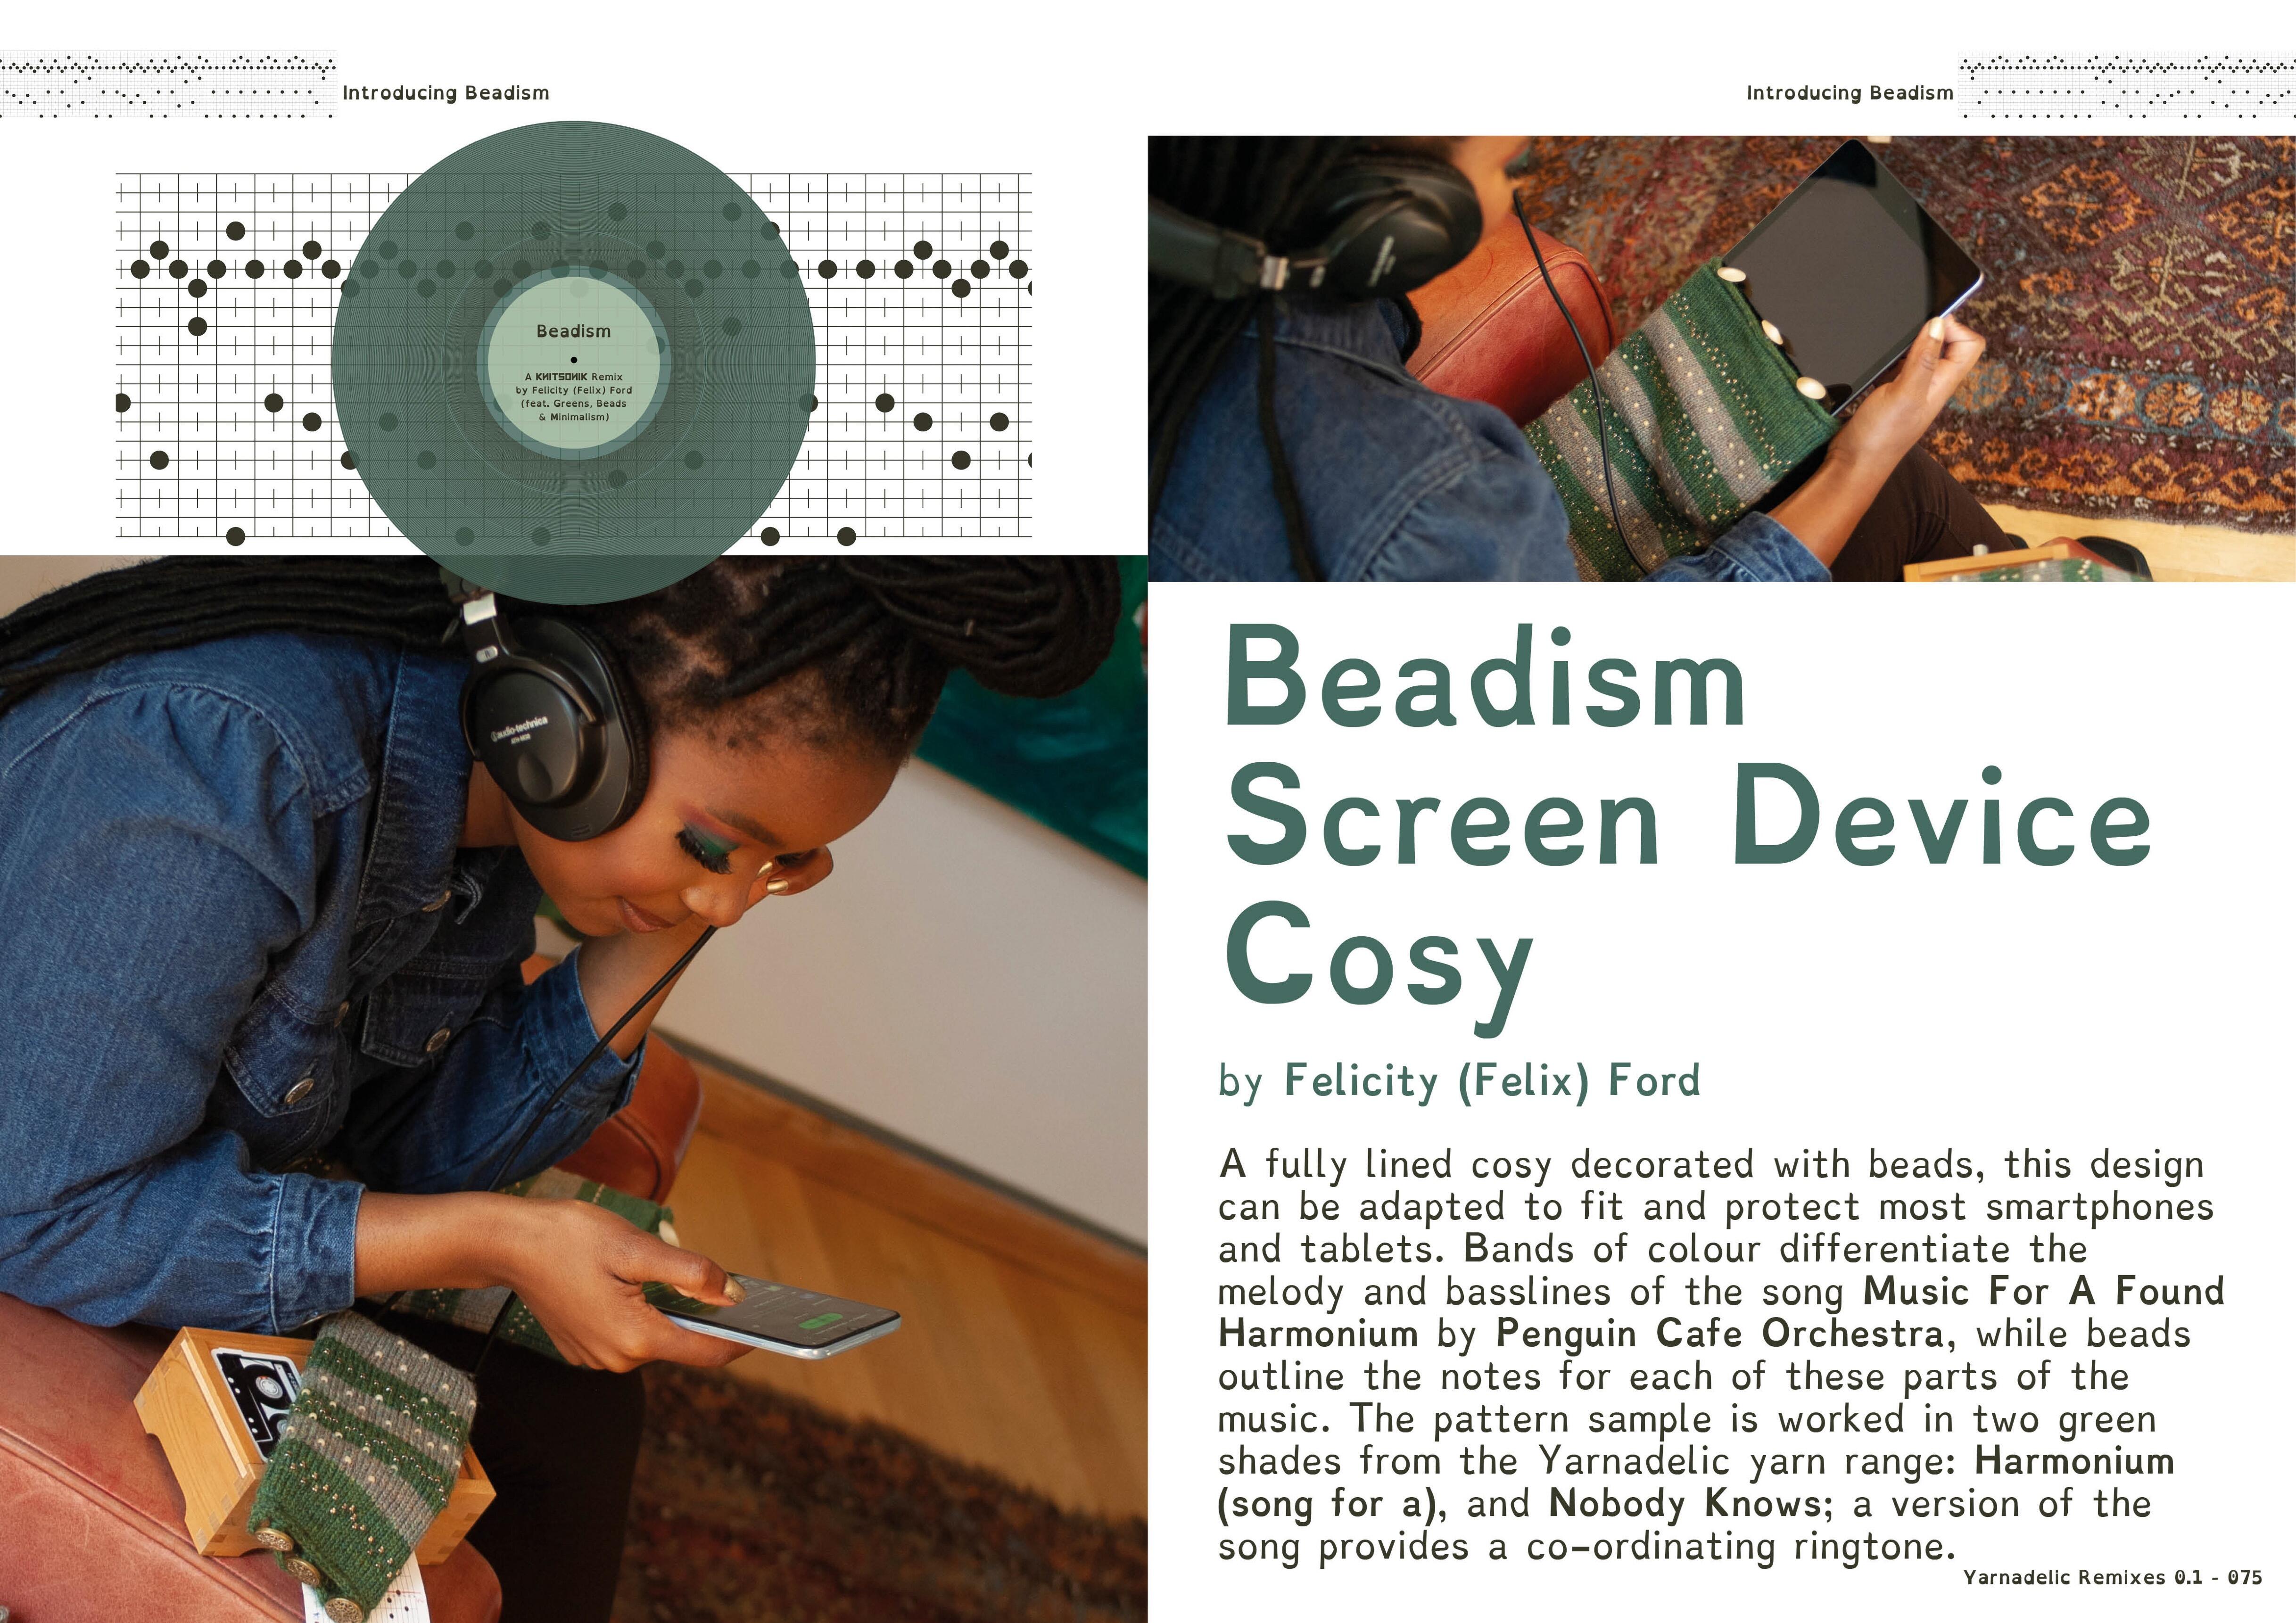 Yarnadelic Remixes 0.1 - spread introducing Beadism Beaded Device Cosy